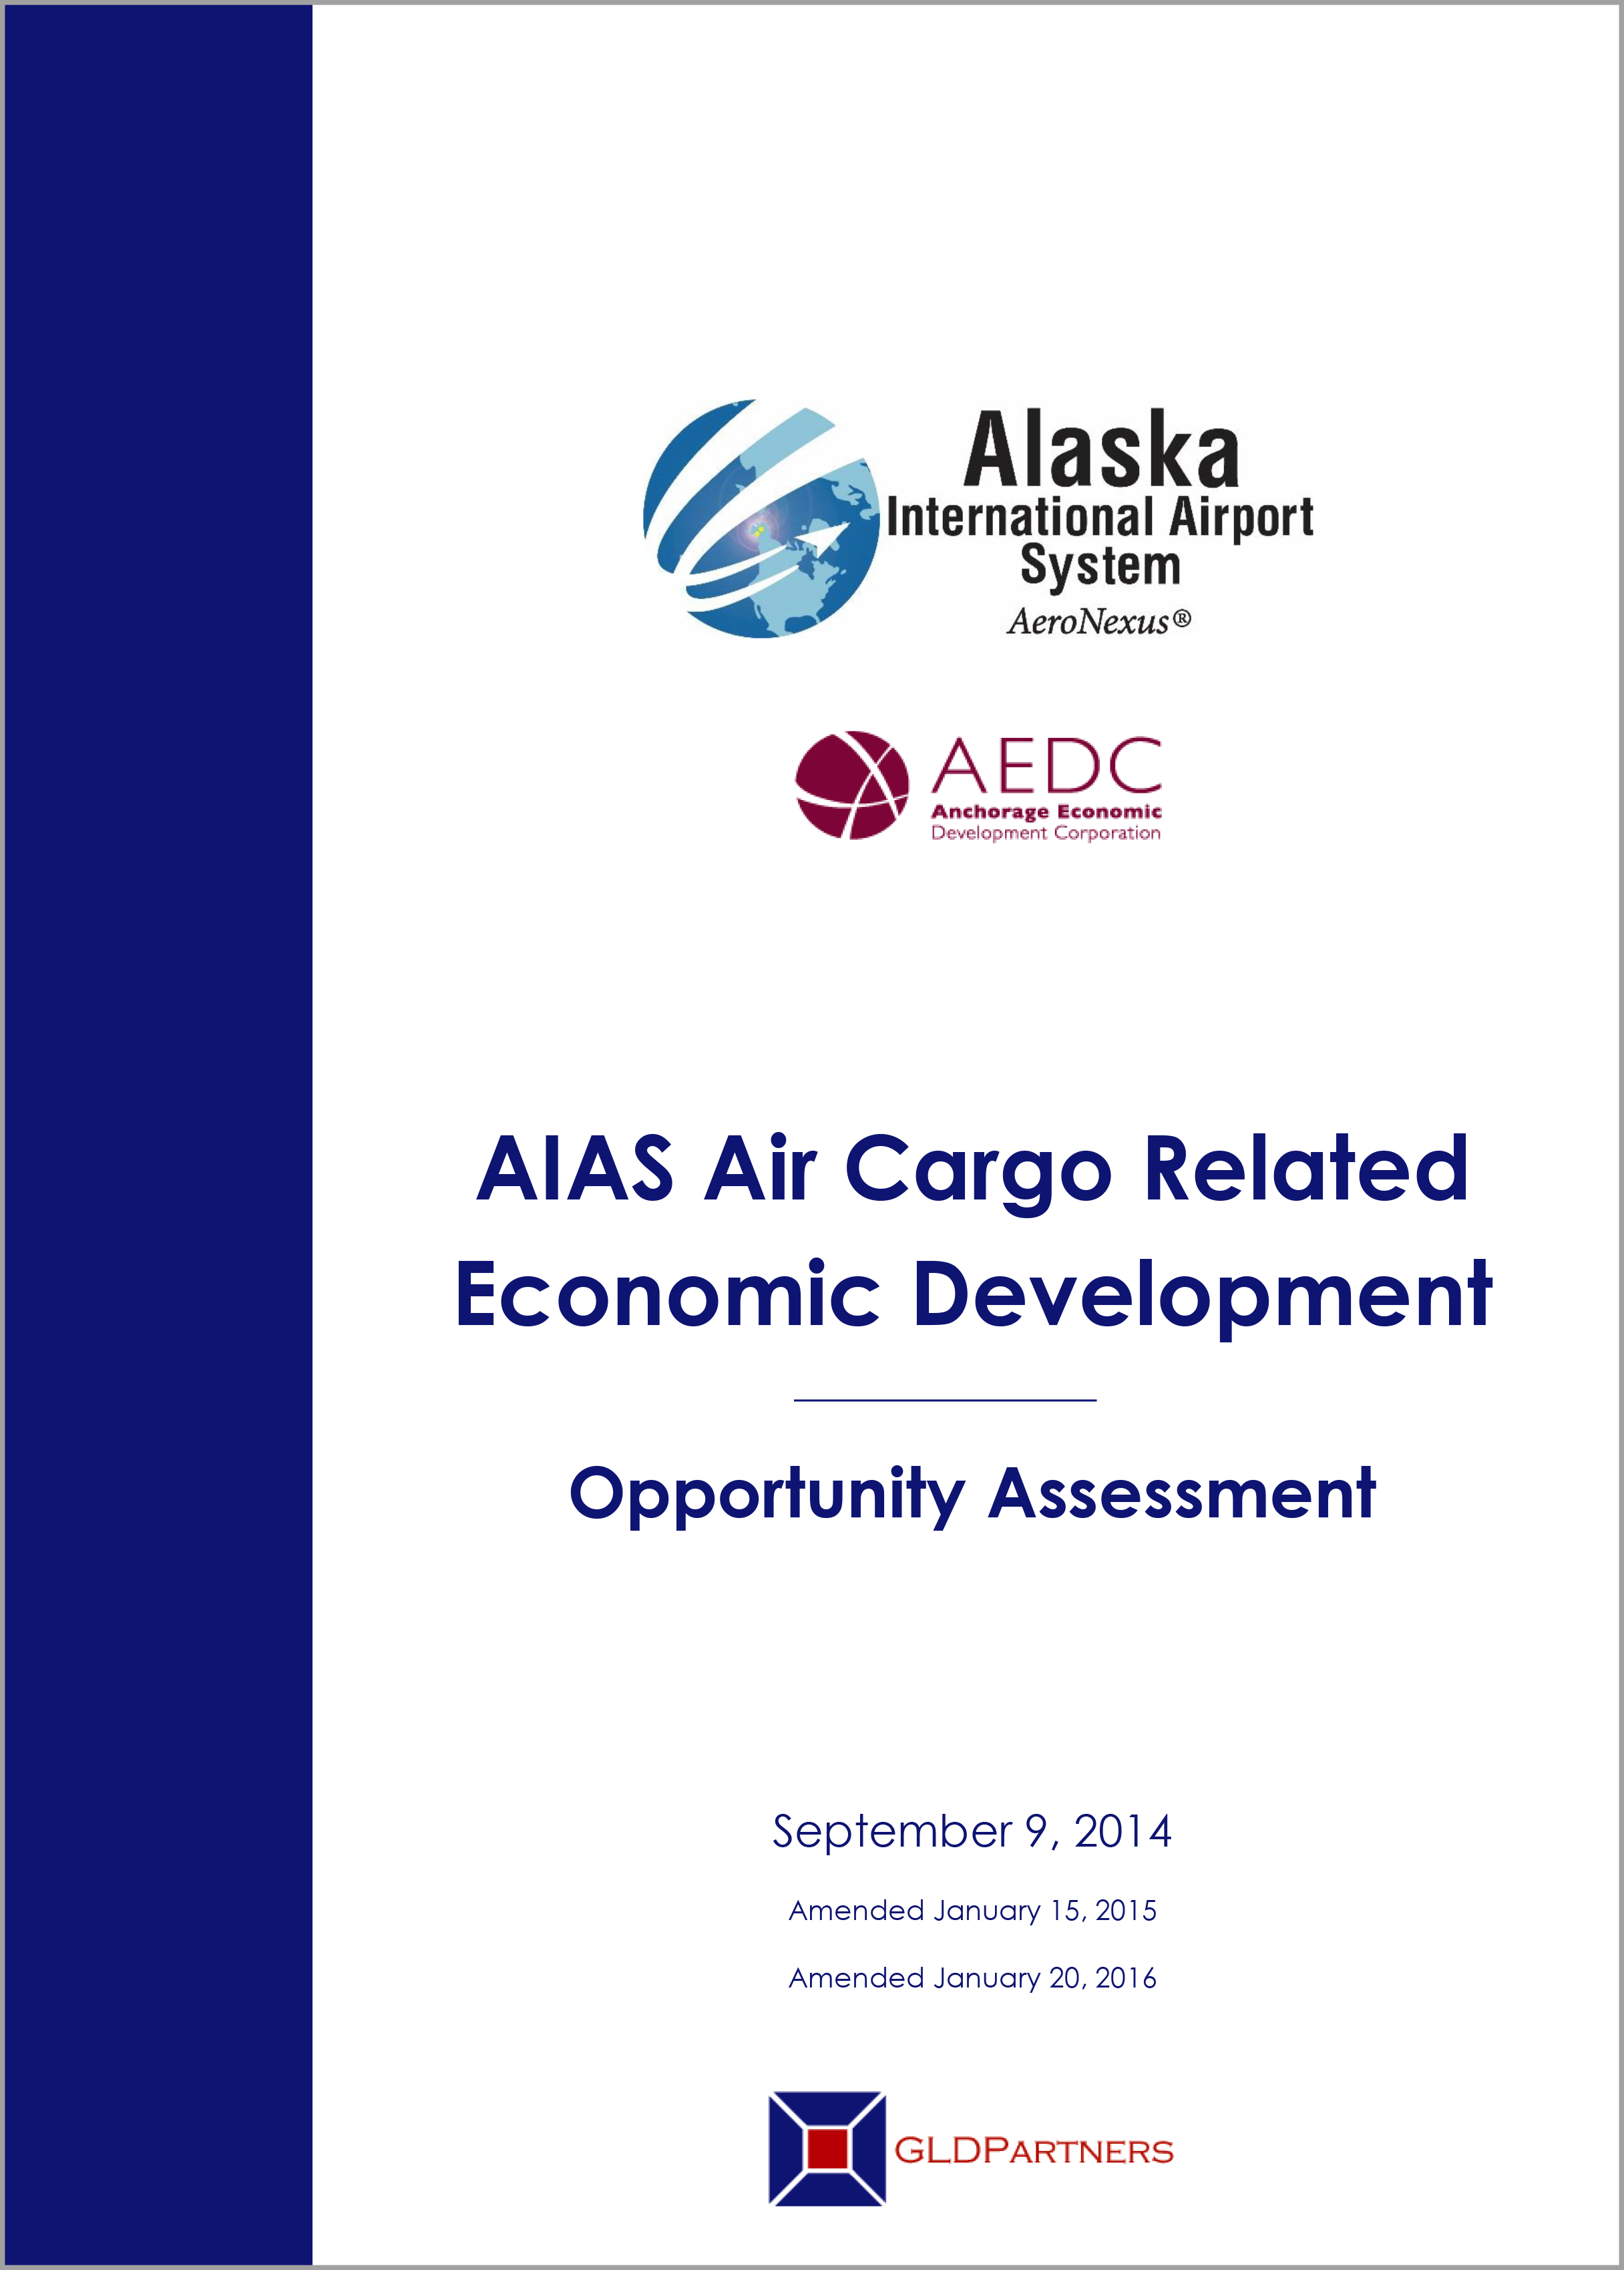 AIAS Air Cargo Economic Development Opportunities